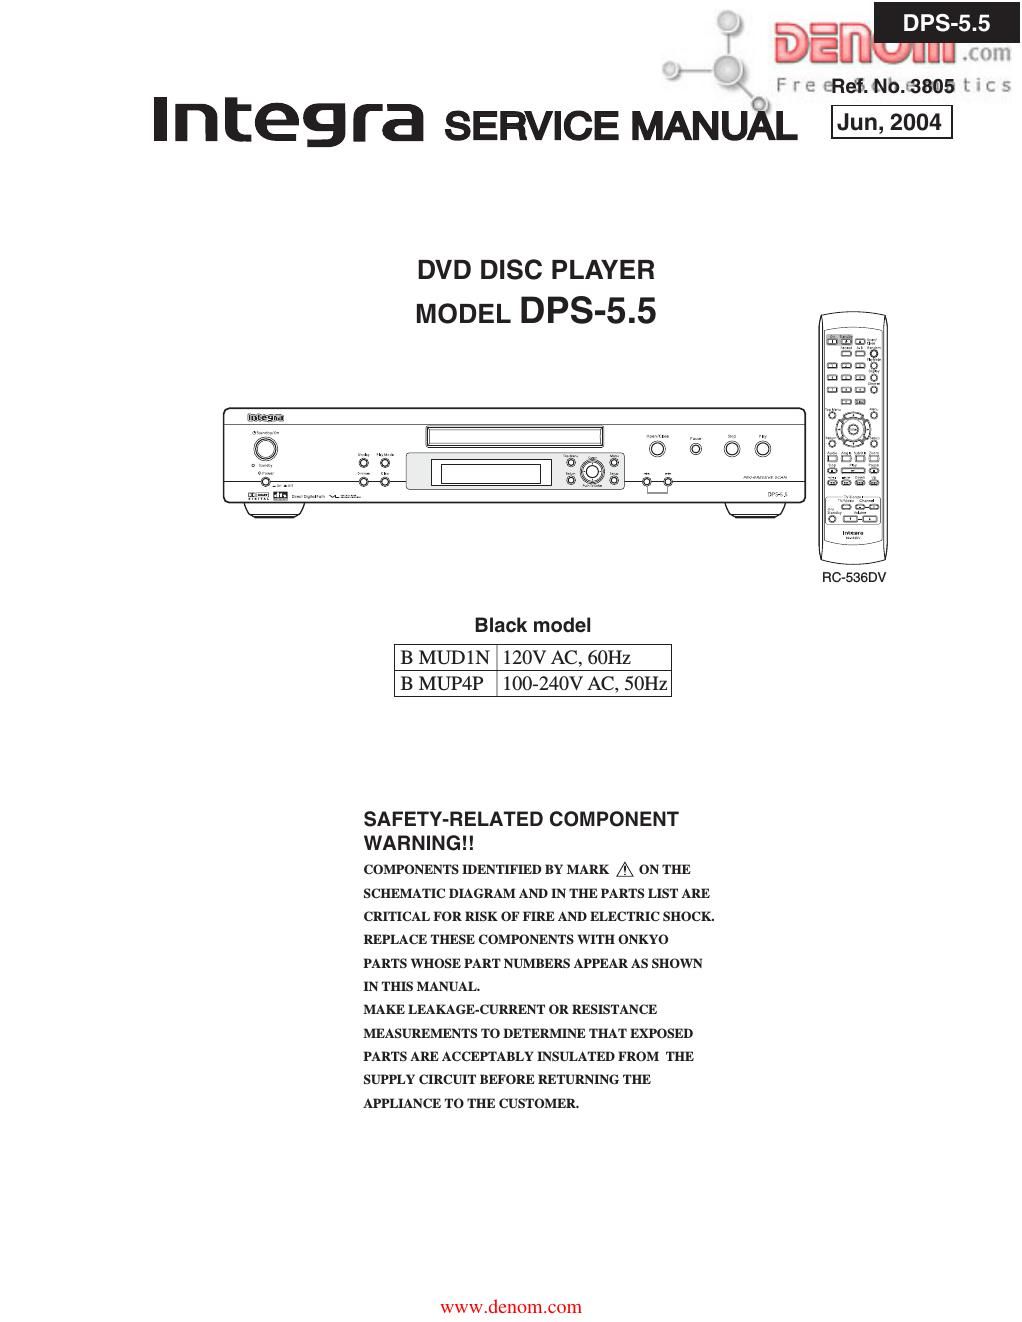 integra dps 5 5 service manual